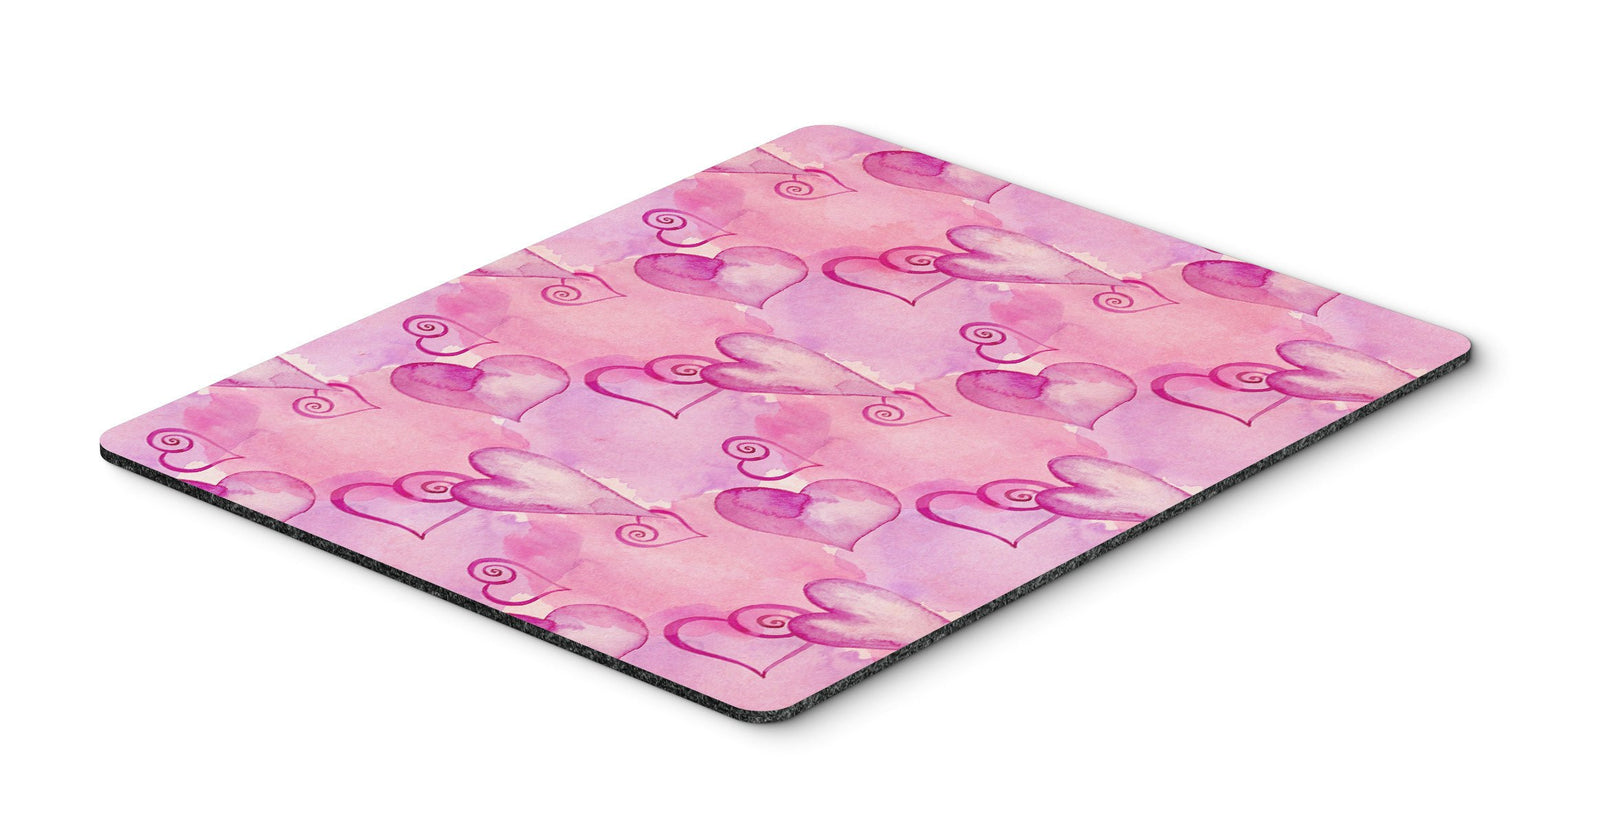 Watercolor Hot Pink Hearts Mouse Pad, Hot Pad or Trivet BB7564MP by Caroline's Treasures